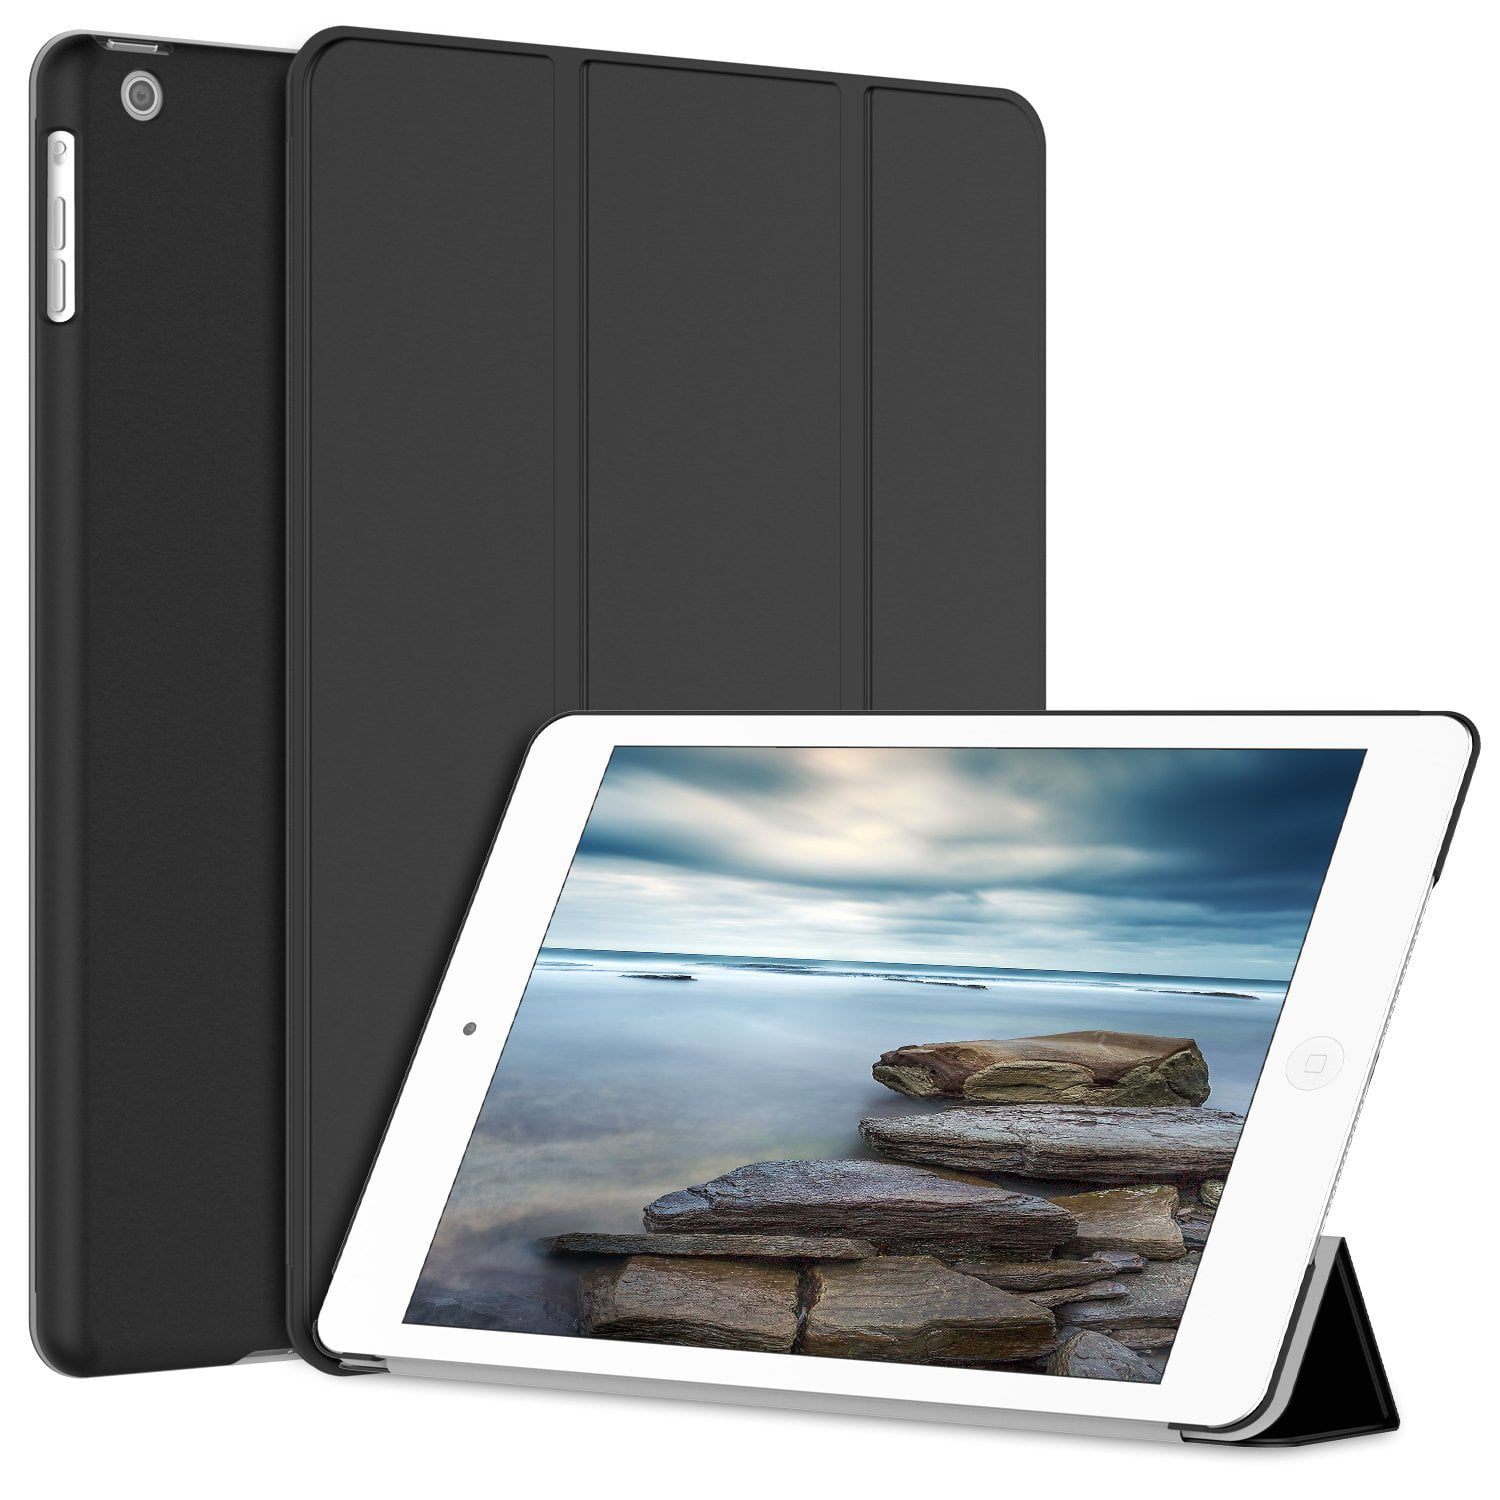 Apple iPad 5th Gen MP2J2LL/A 9.7 inch (WiFi Only) Tablet - 128GB 